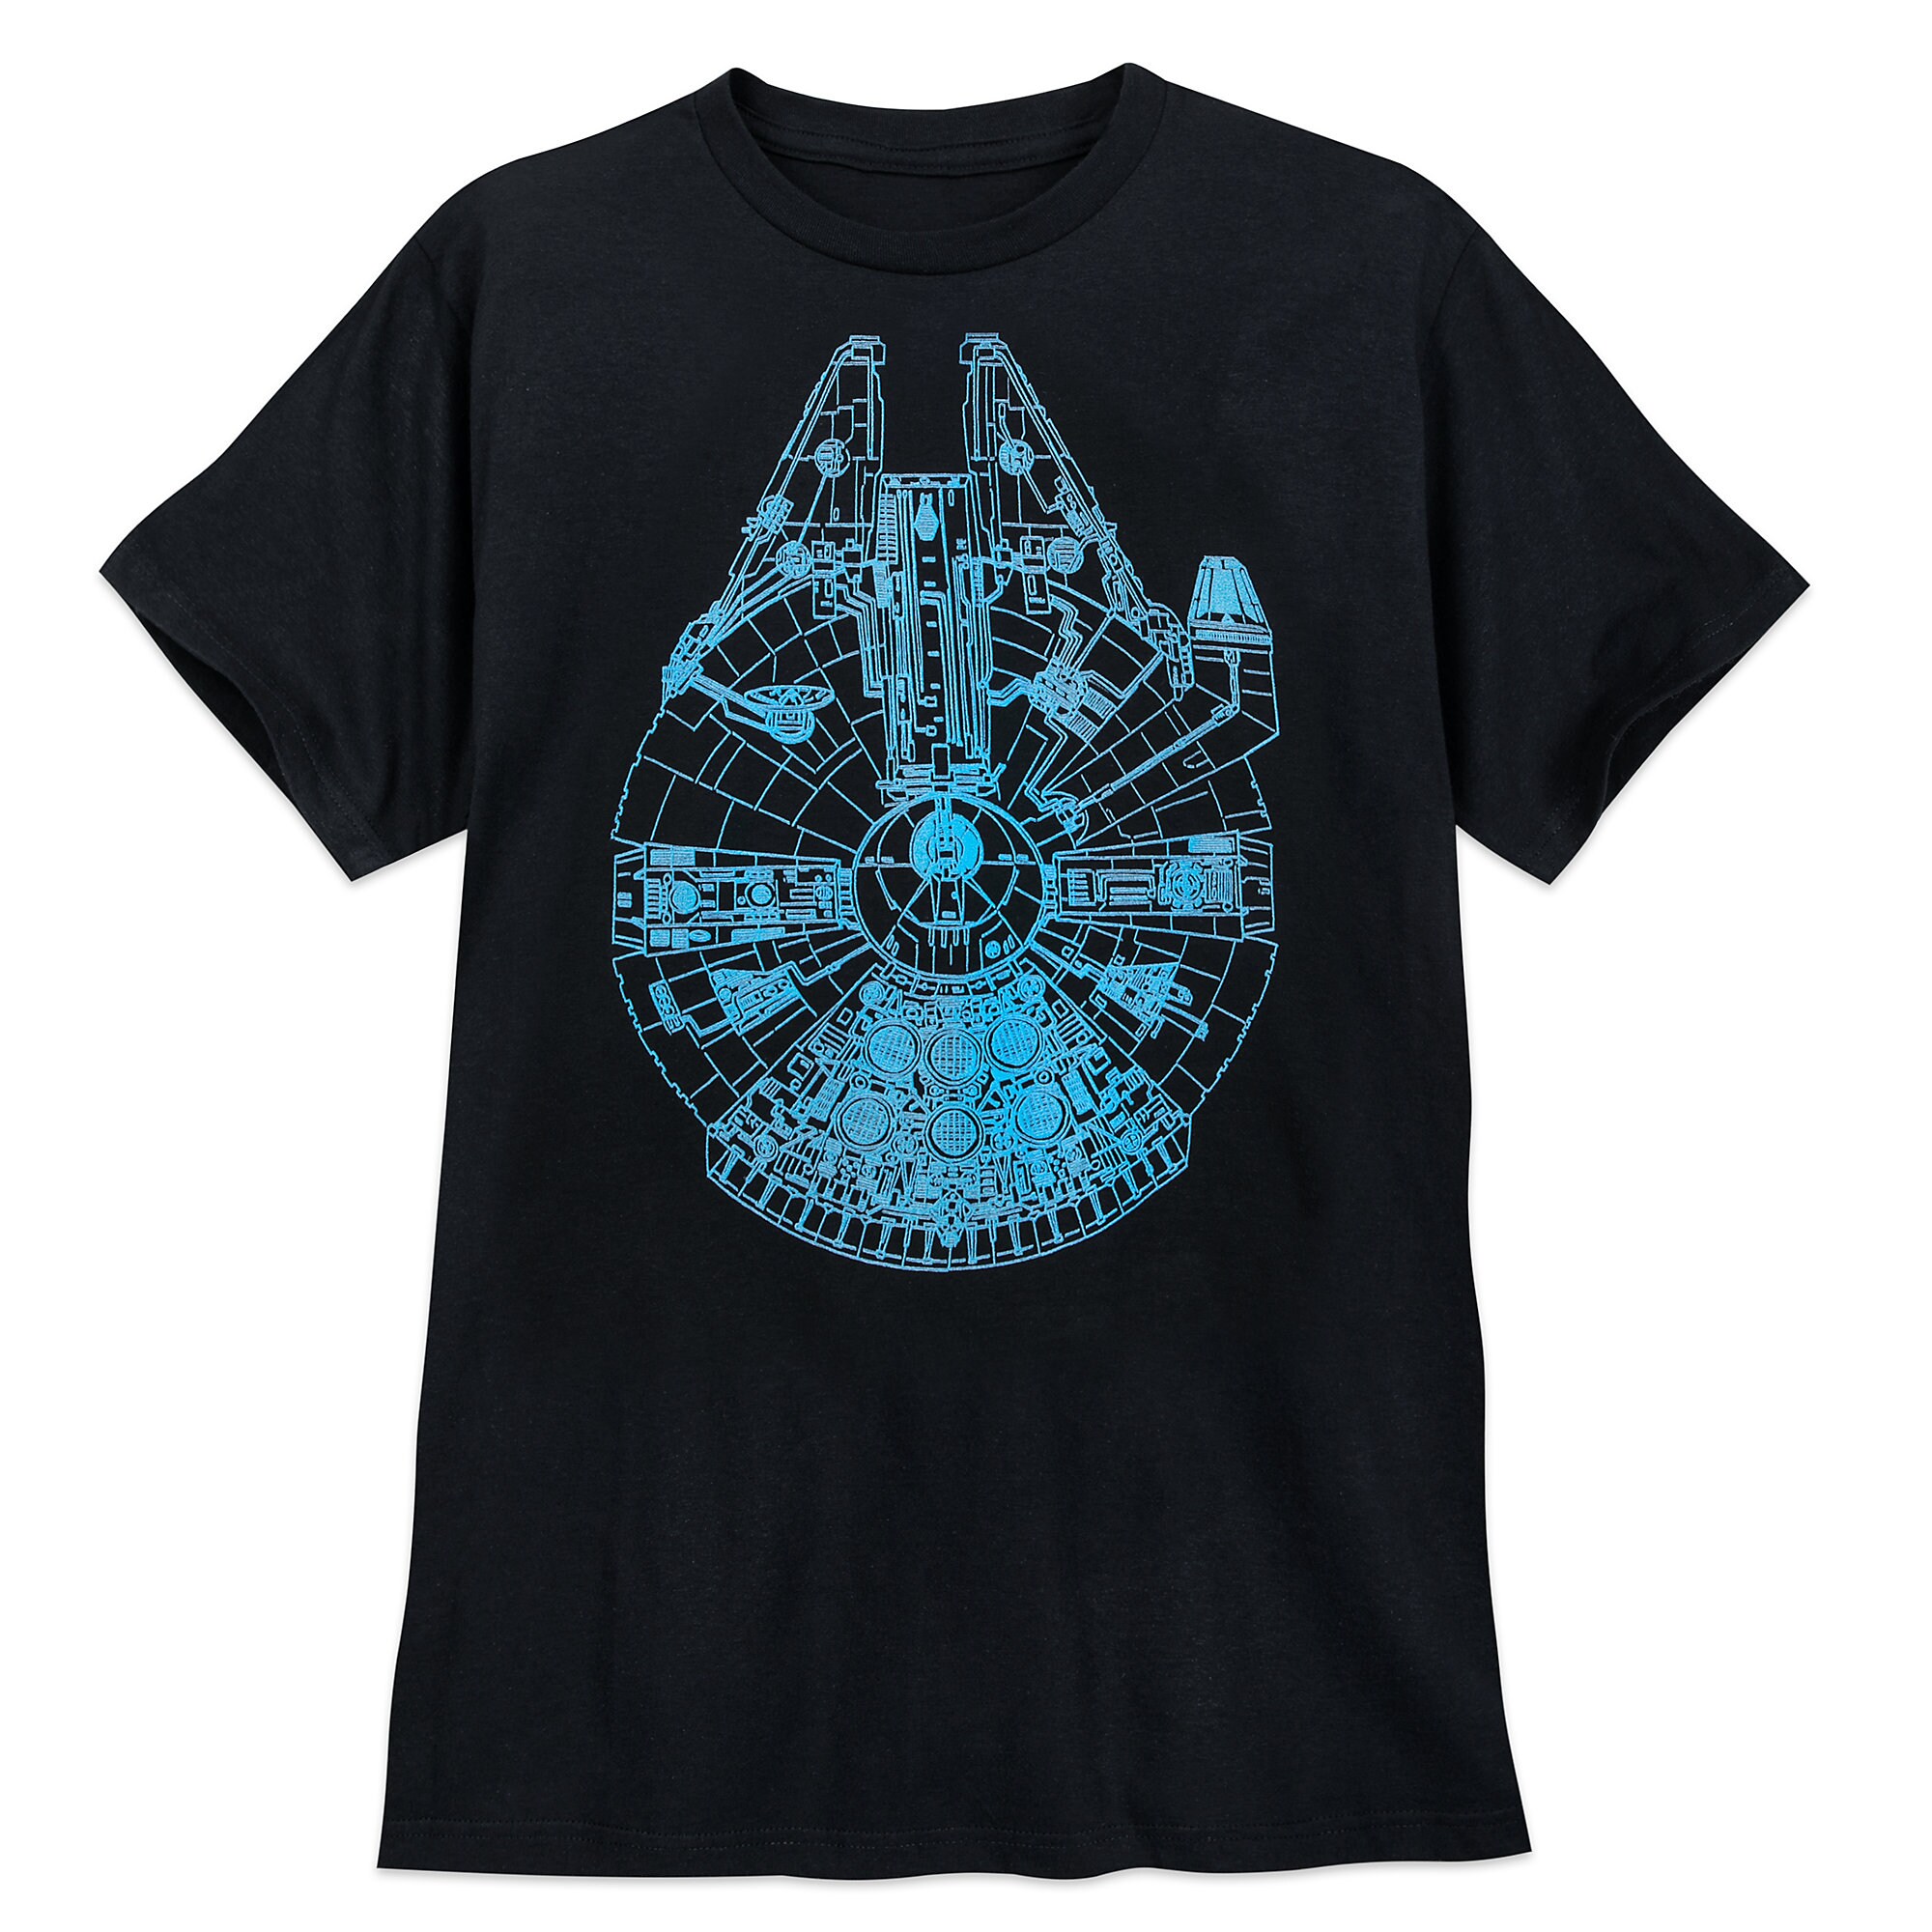 Millennium Falcon T-Shirt for Adults - Star Wars